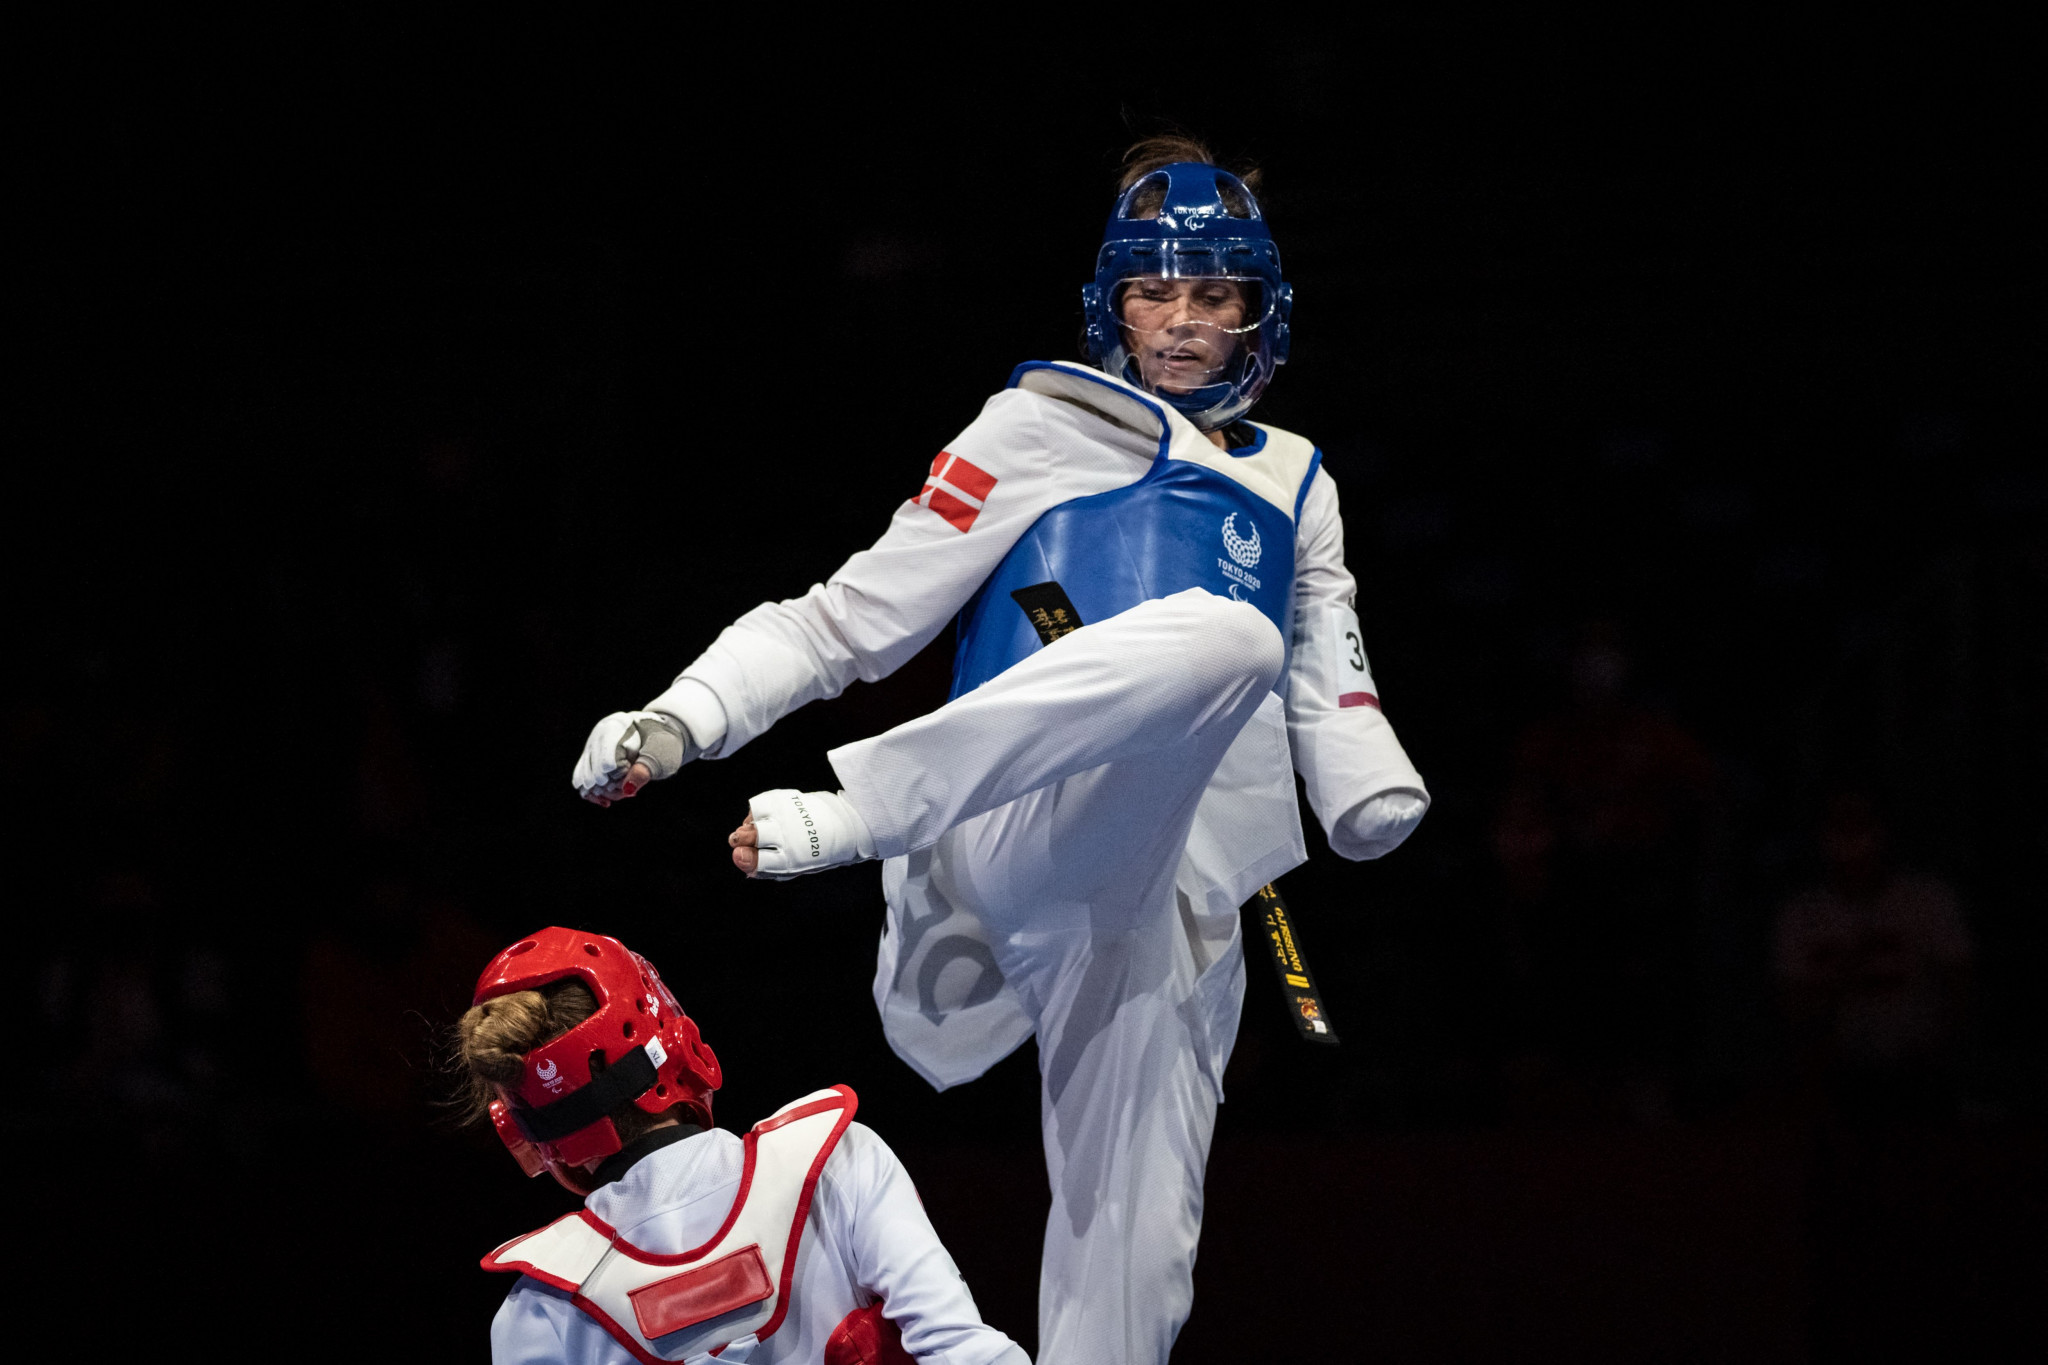 Paralympic champion Gjessing leads "Taekwondo for Peace" fundraiser for Ukraine